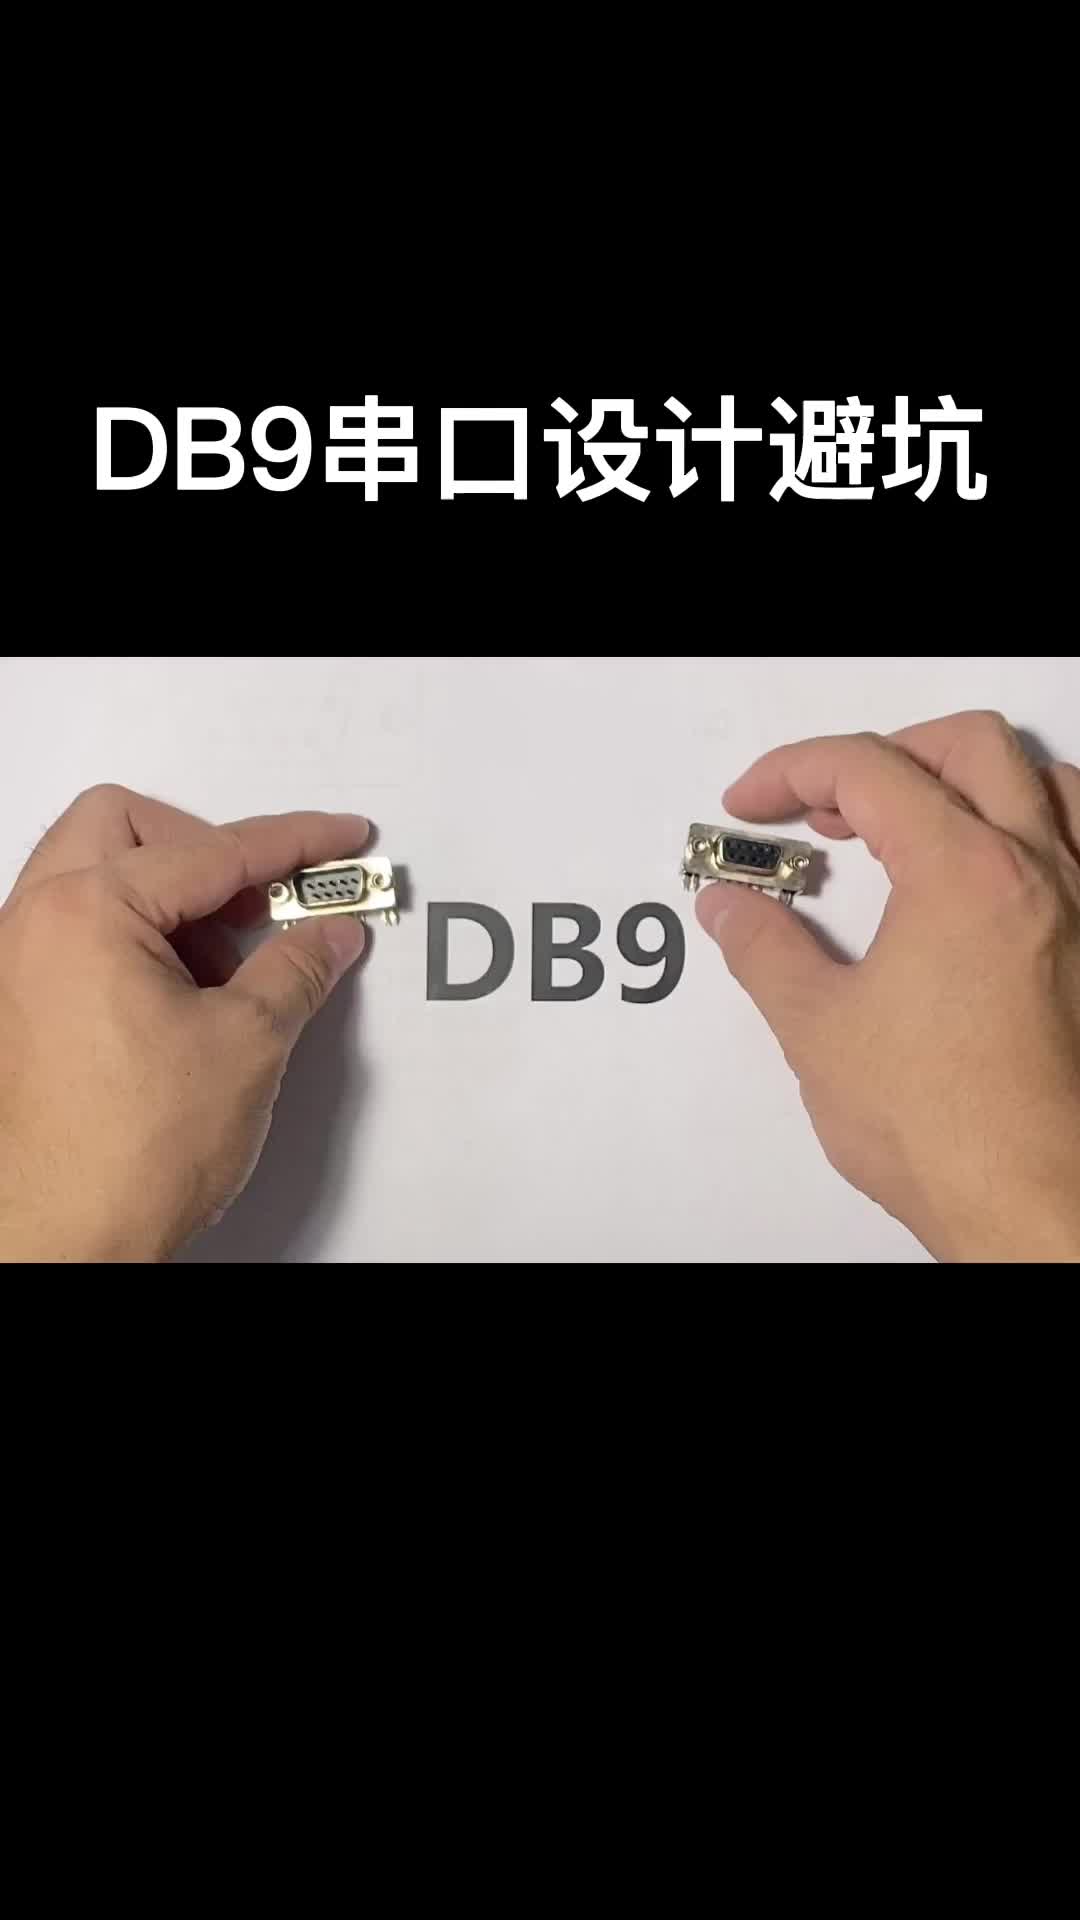 DB9串口设计避坑#电路设计 